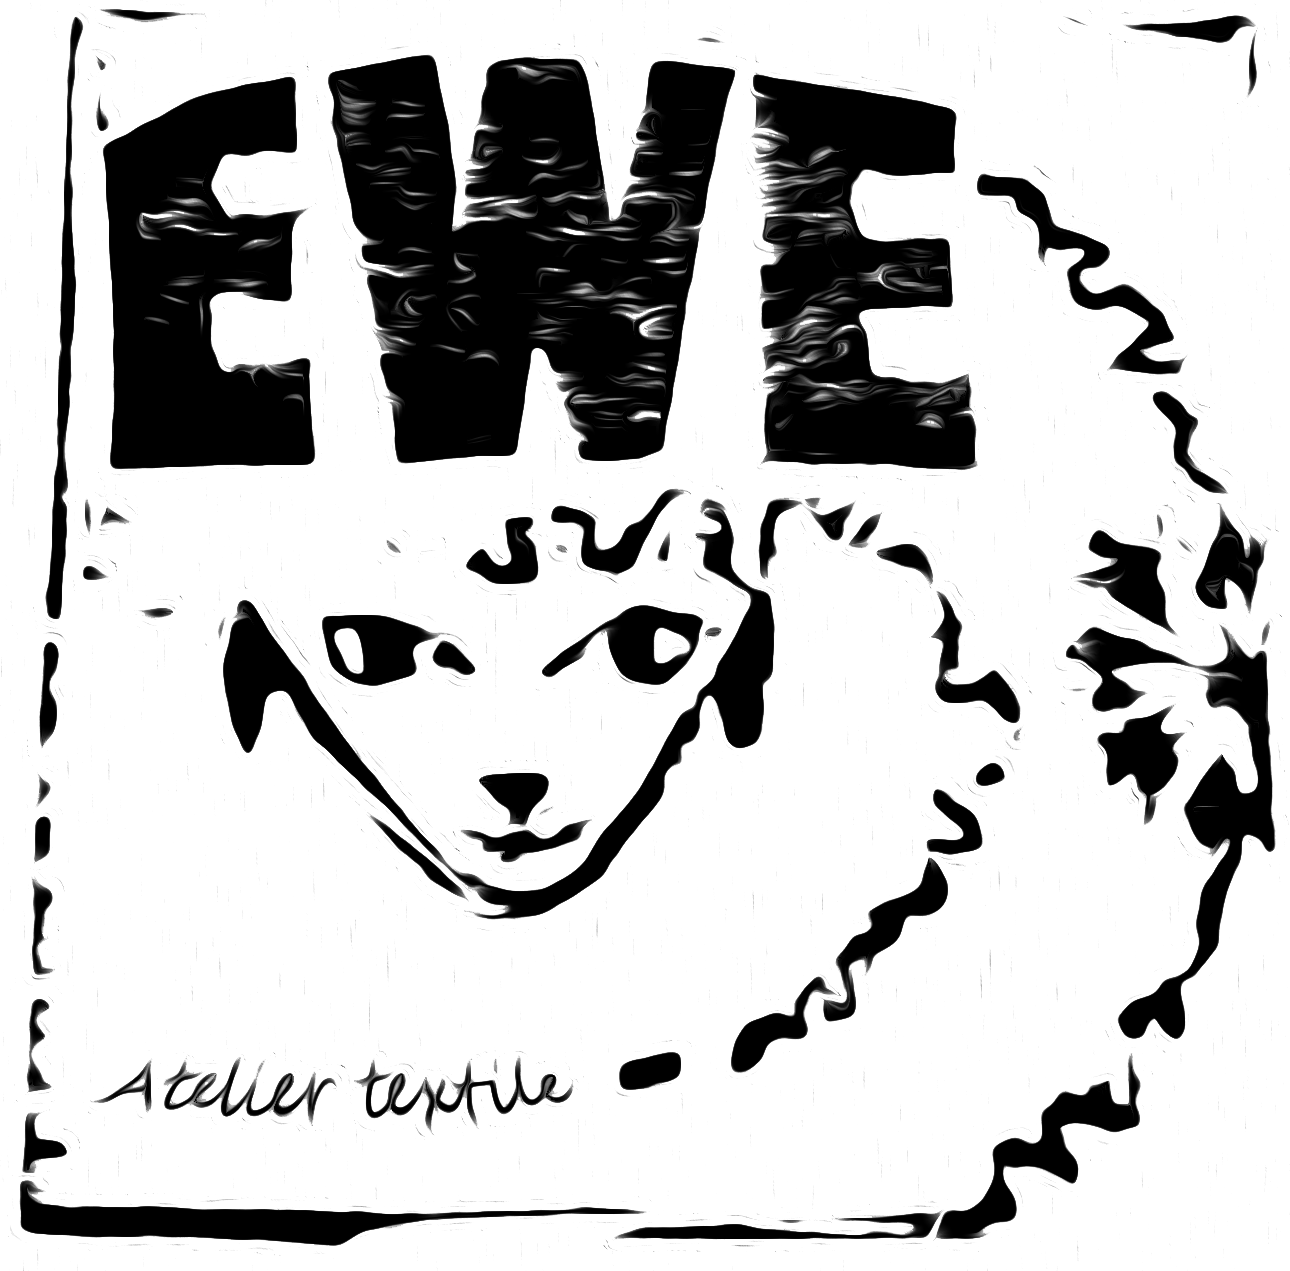 Atelier Ewe